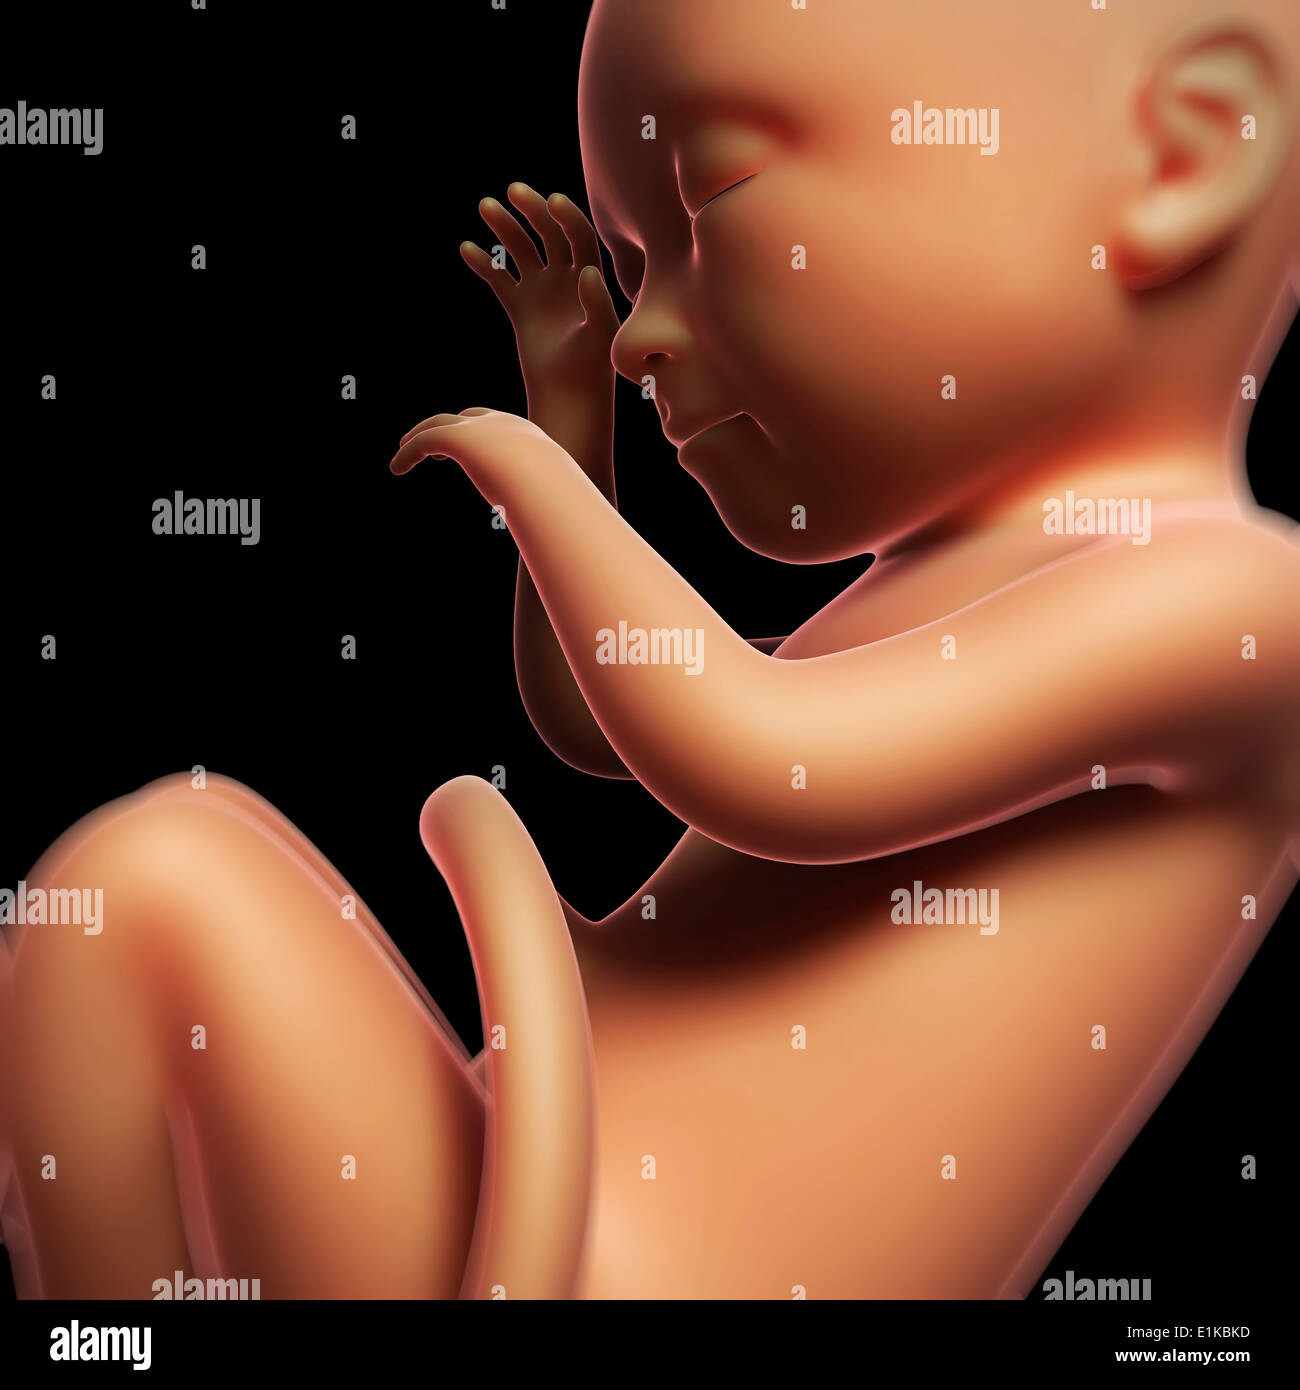 Foetus at 9 months computer artwork. Stock Photo